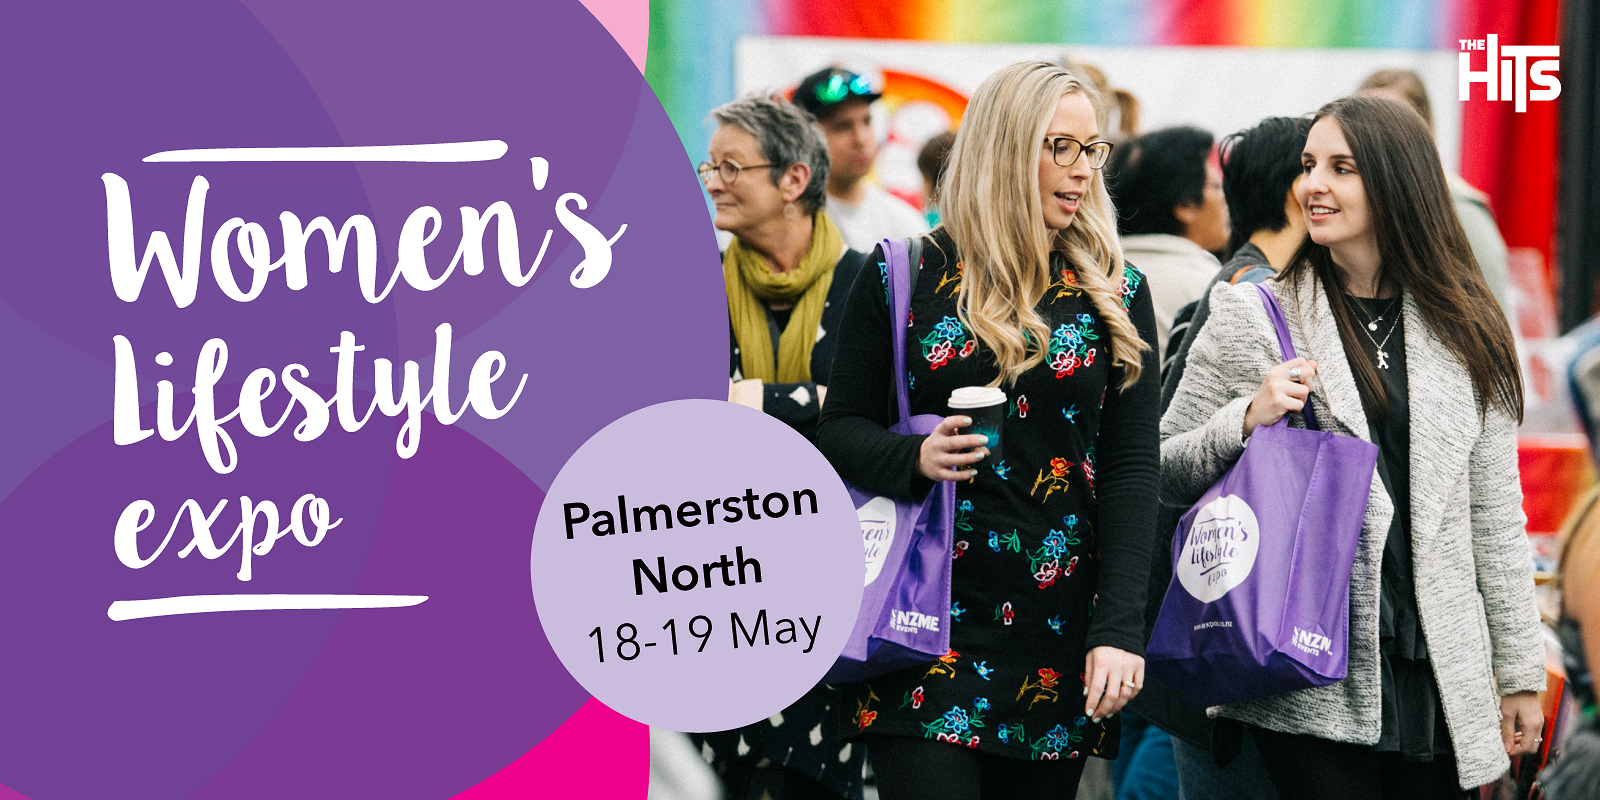 Palmerston North Women's Lifestyle Expo